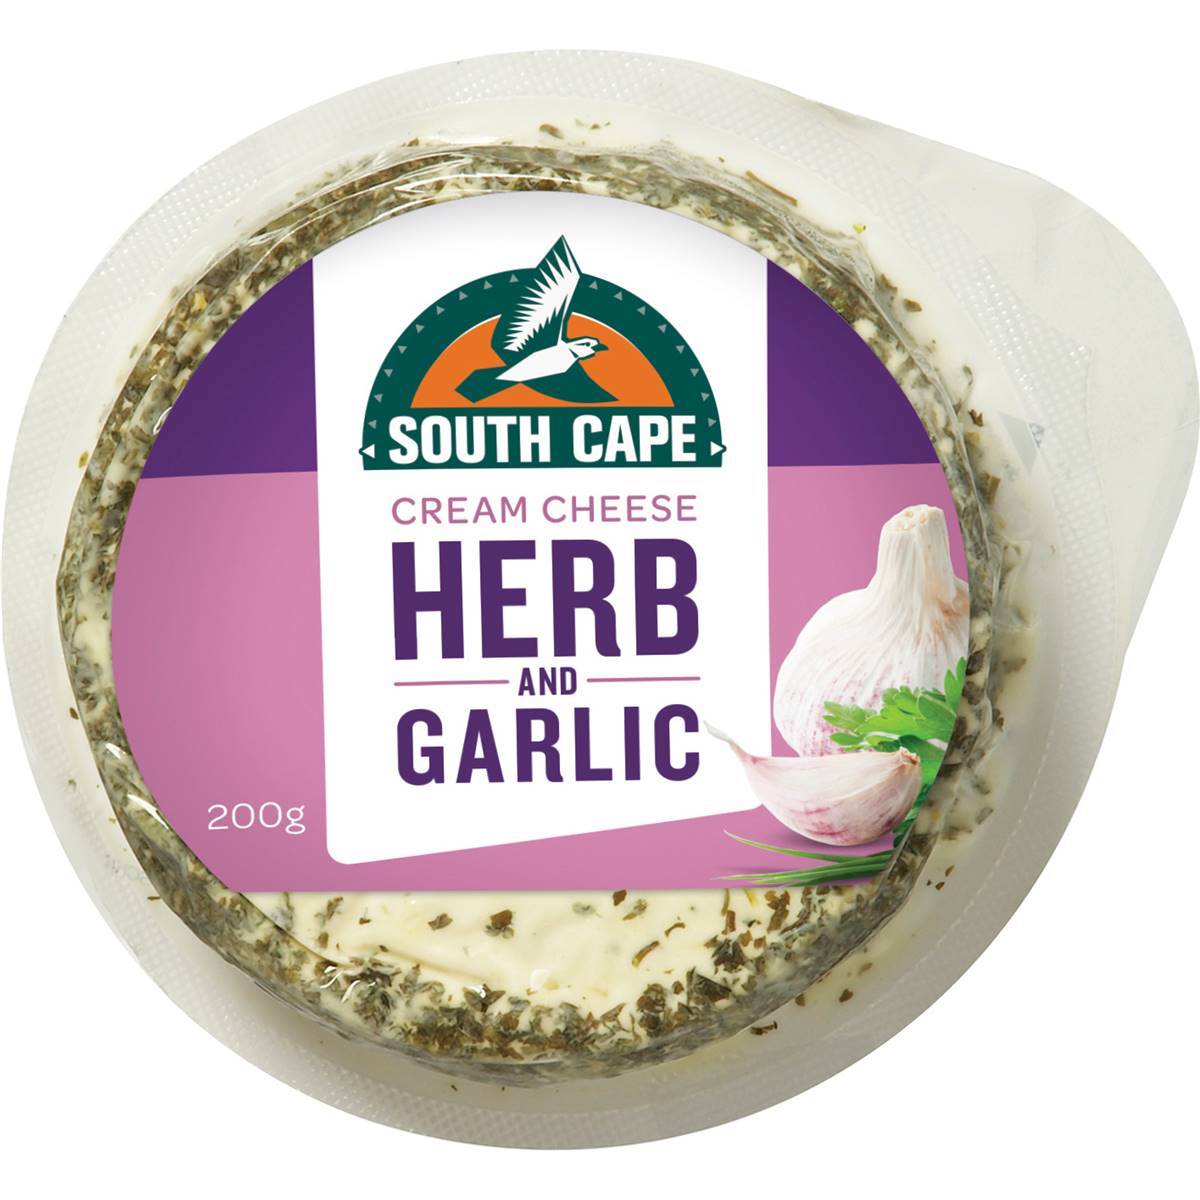 Calories in South Cape Herb & Garlic Cream Cheese